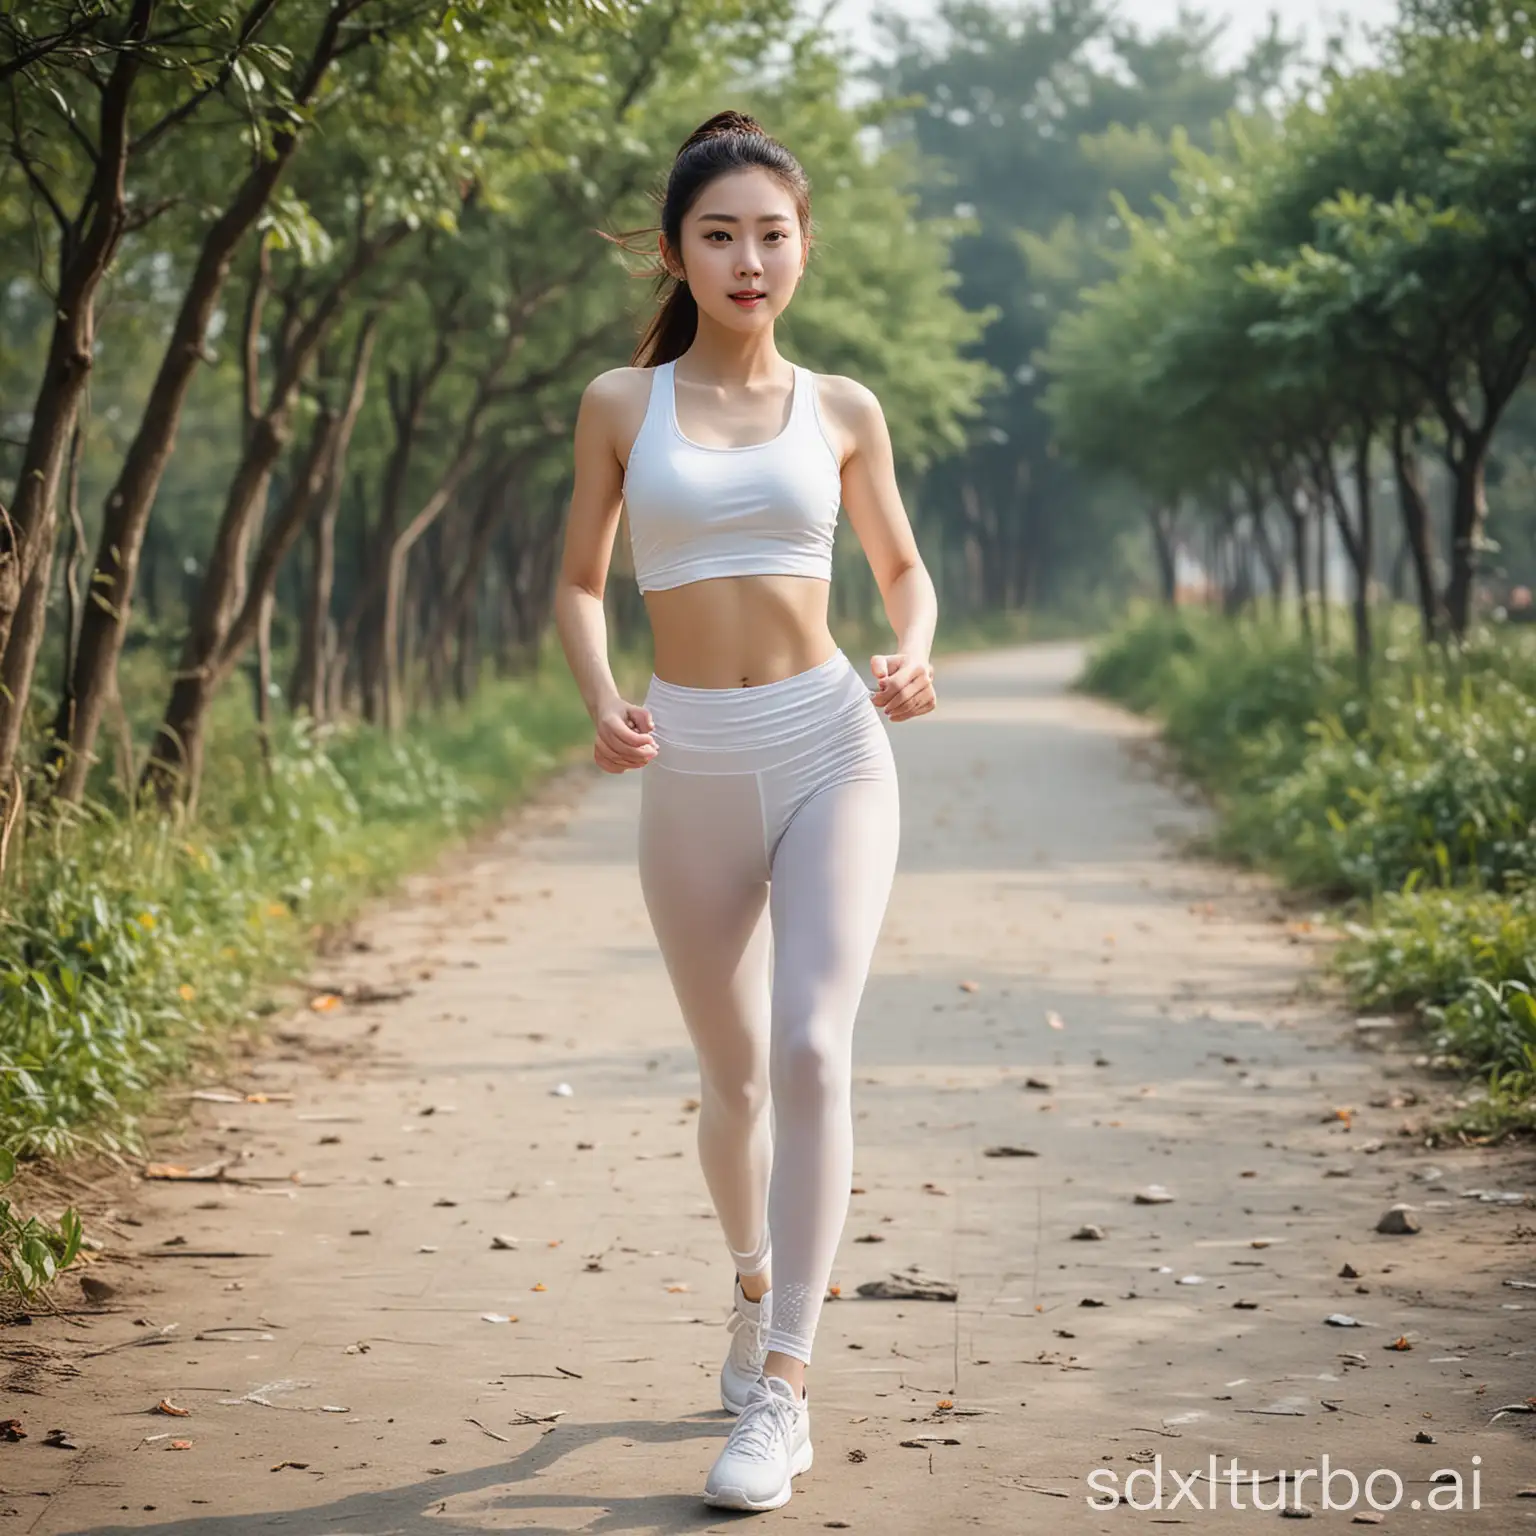 Chinese-Beautiful-Girl-Running-in-White-Translucent-Yoga-Pants